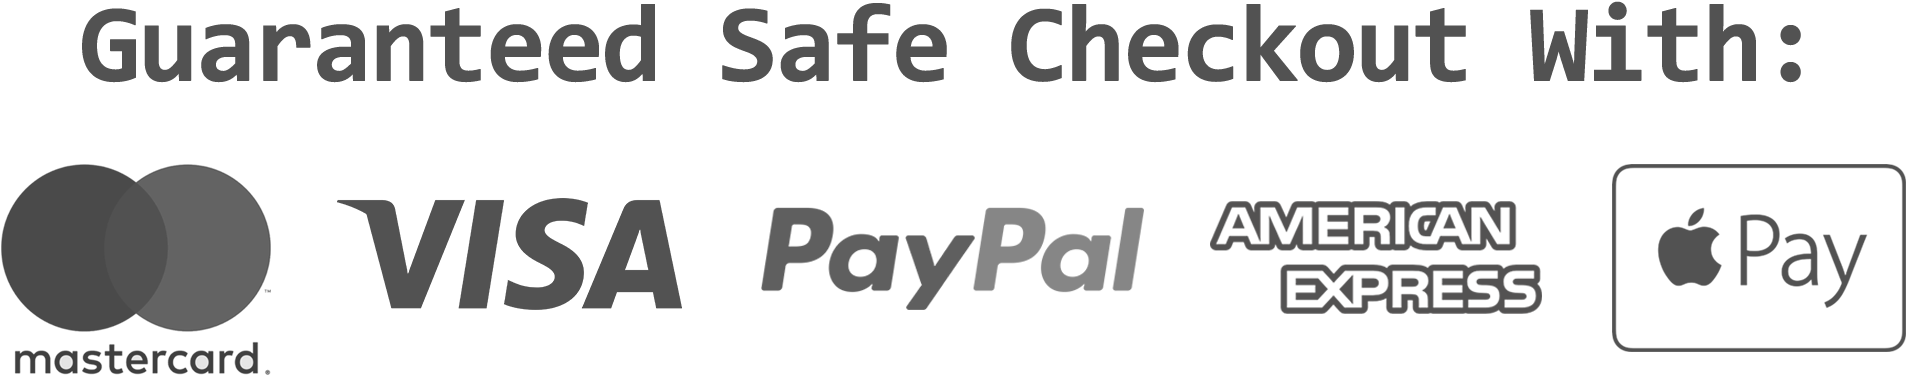 Guaranteed Safe Checkout PNG Image